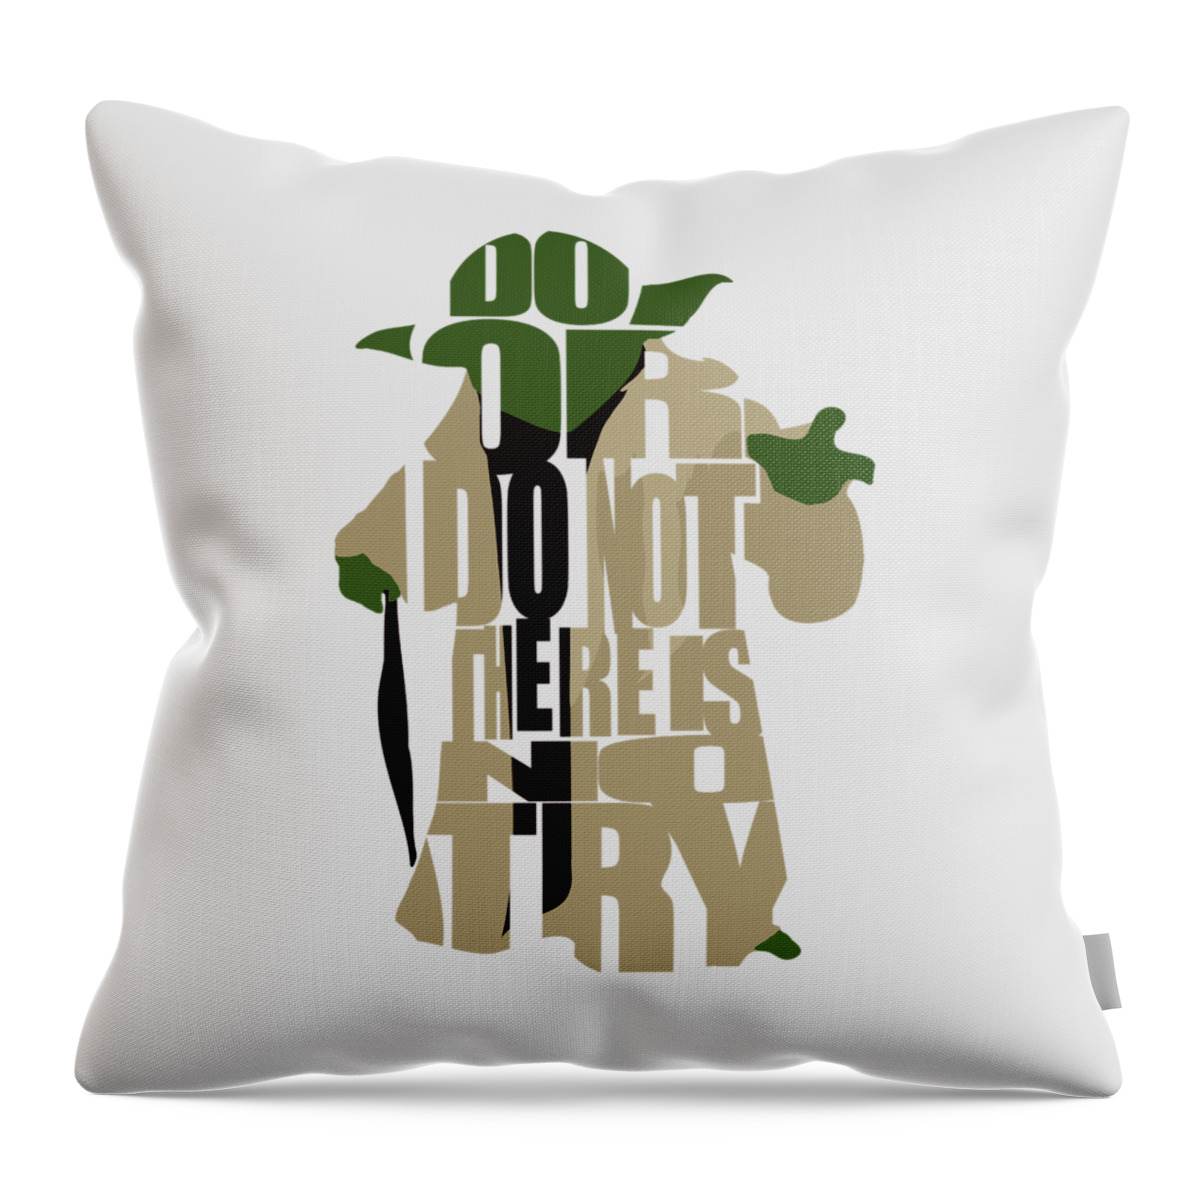 Yoda Throw Pillow featuring the digital art Yoda - Star Wars by Inspirowl Design